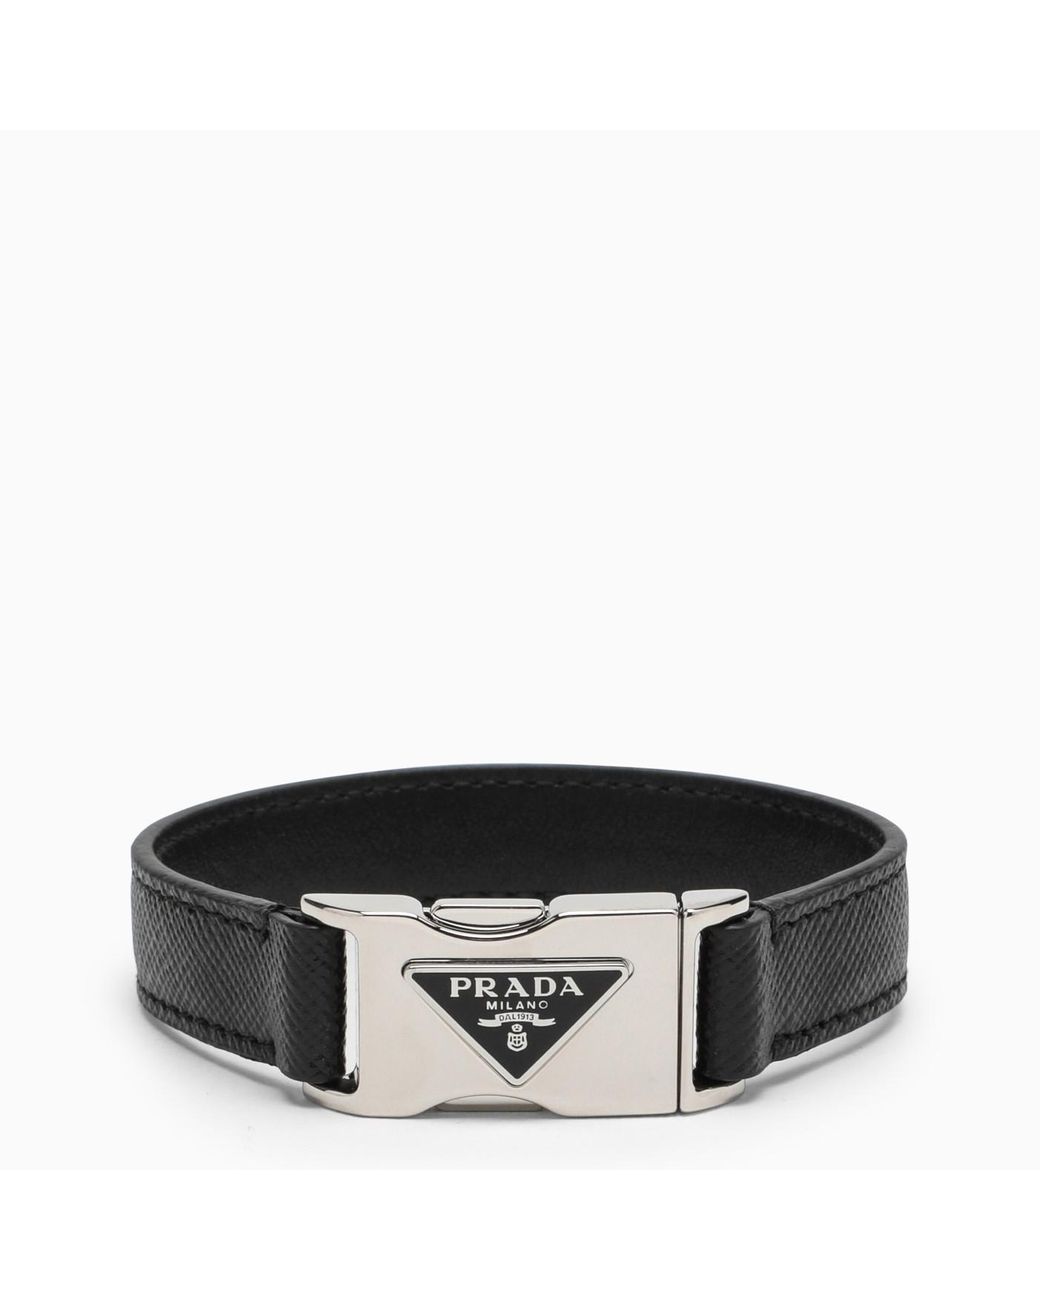 Prada Black Saffiano Leather Bracelet for Men | Lyst